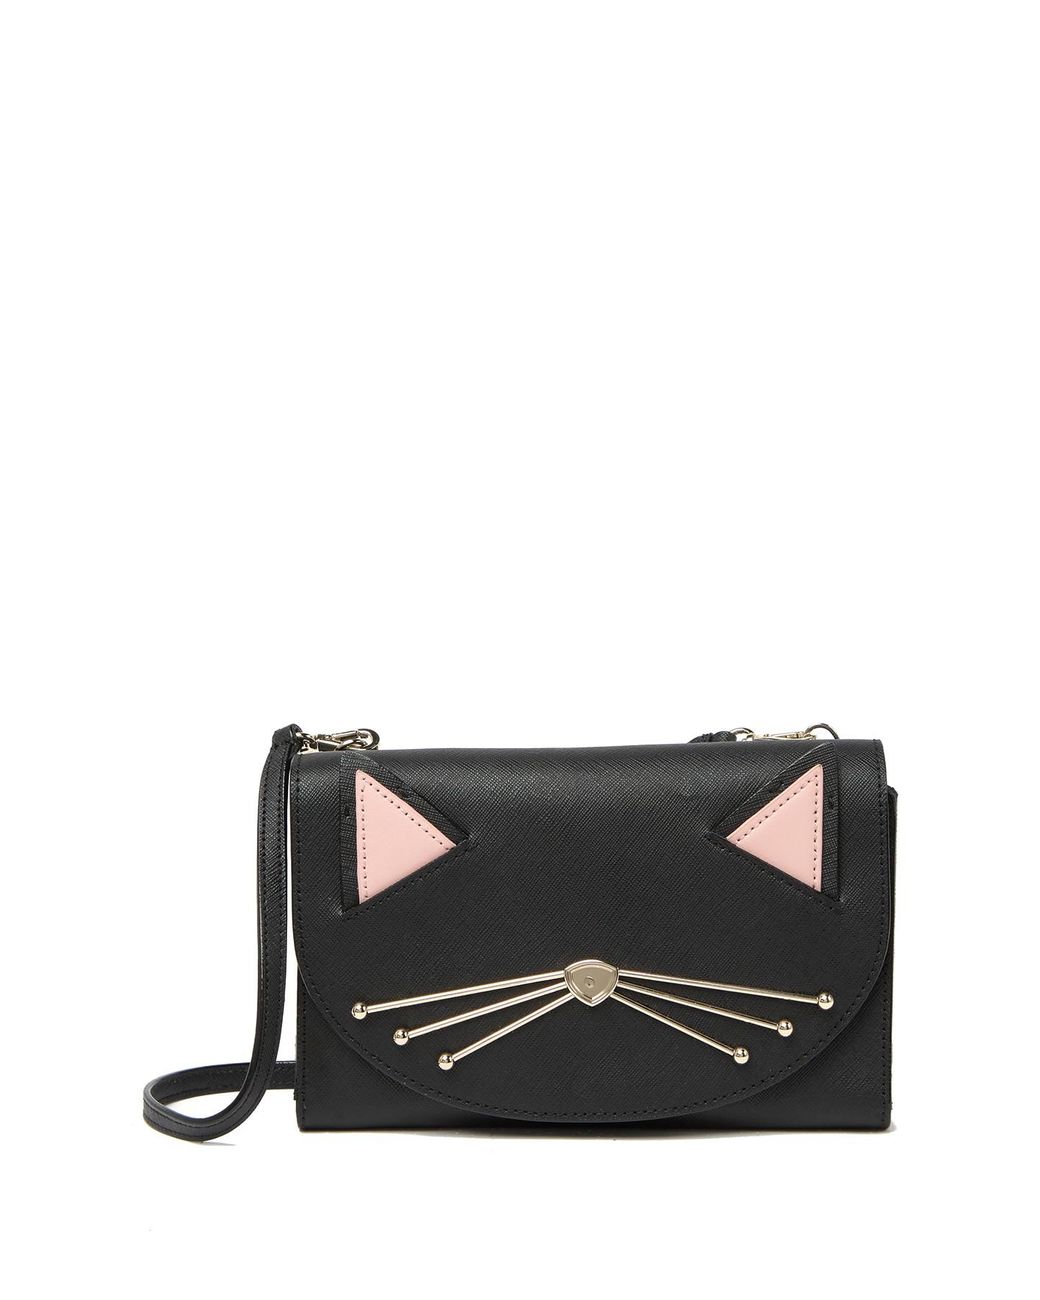 Kate Spade New York CATS Meow Black Crossbody Shoulder bag Purse Used JP |  eBay